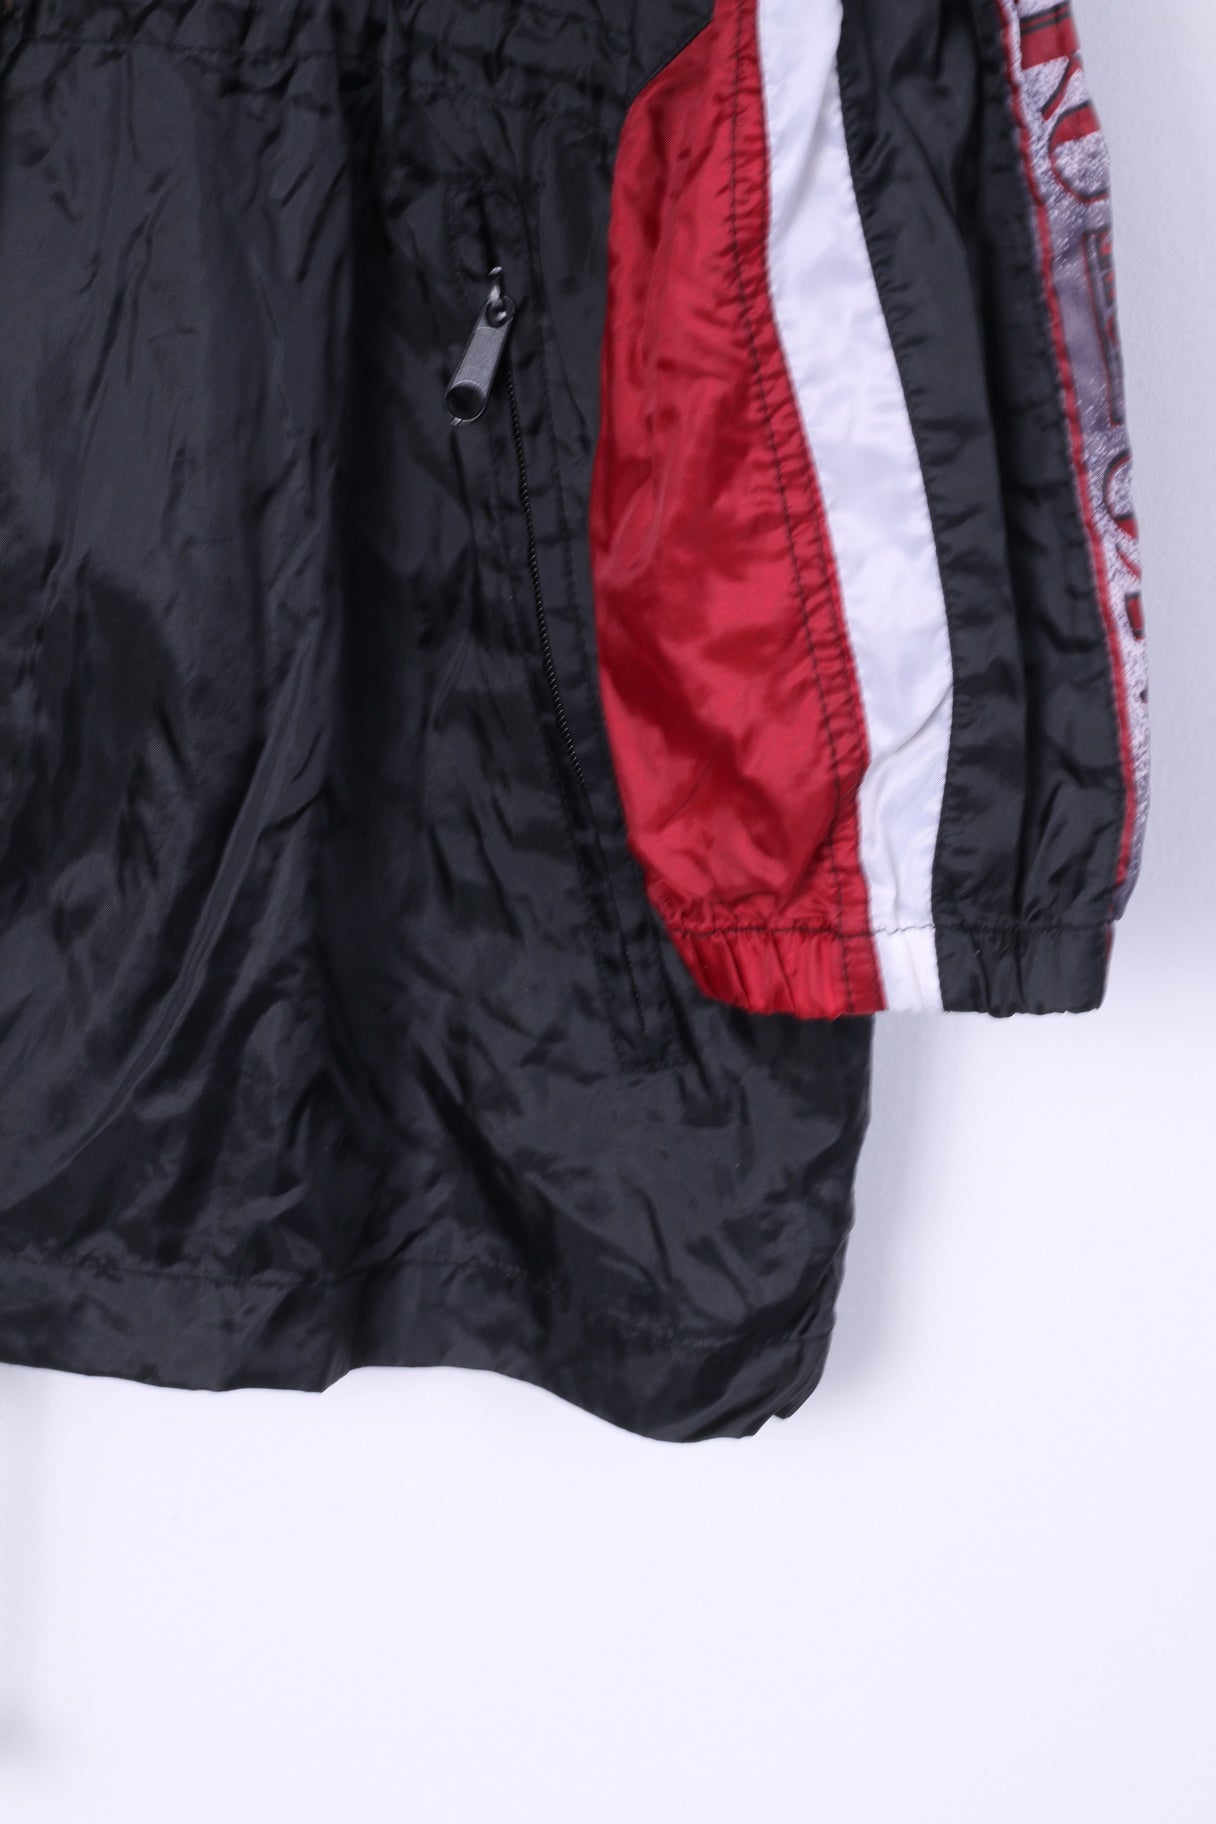 Jako Mens M Lightweight Jacket Black Full Zipper FuBall-Shop Hidden Hood Nylon Waterproof